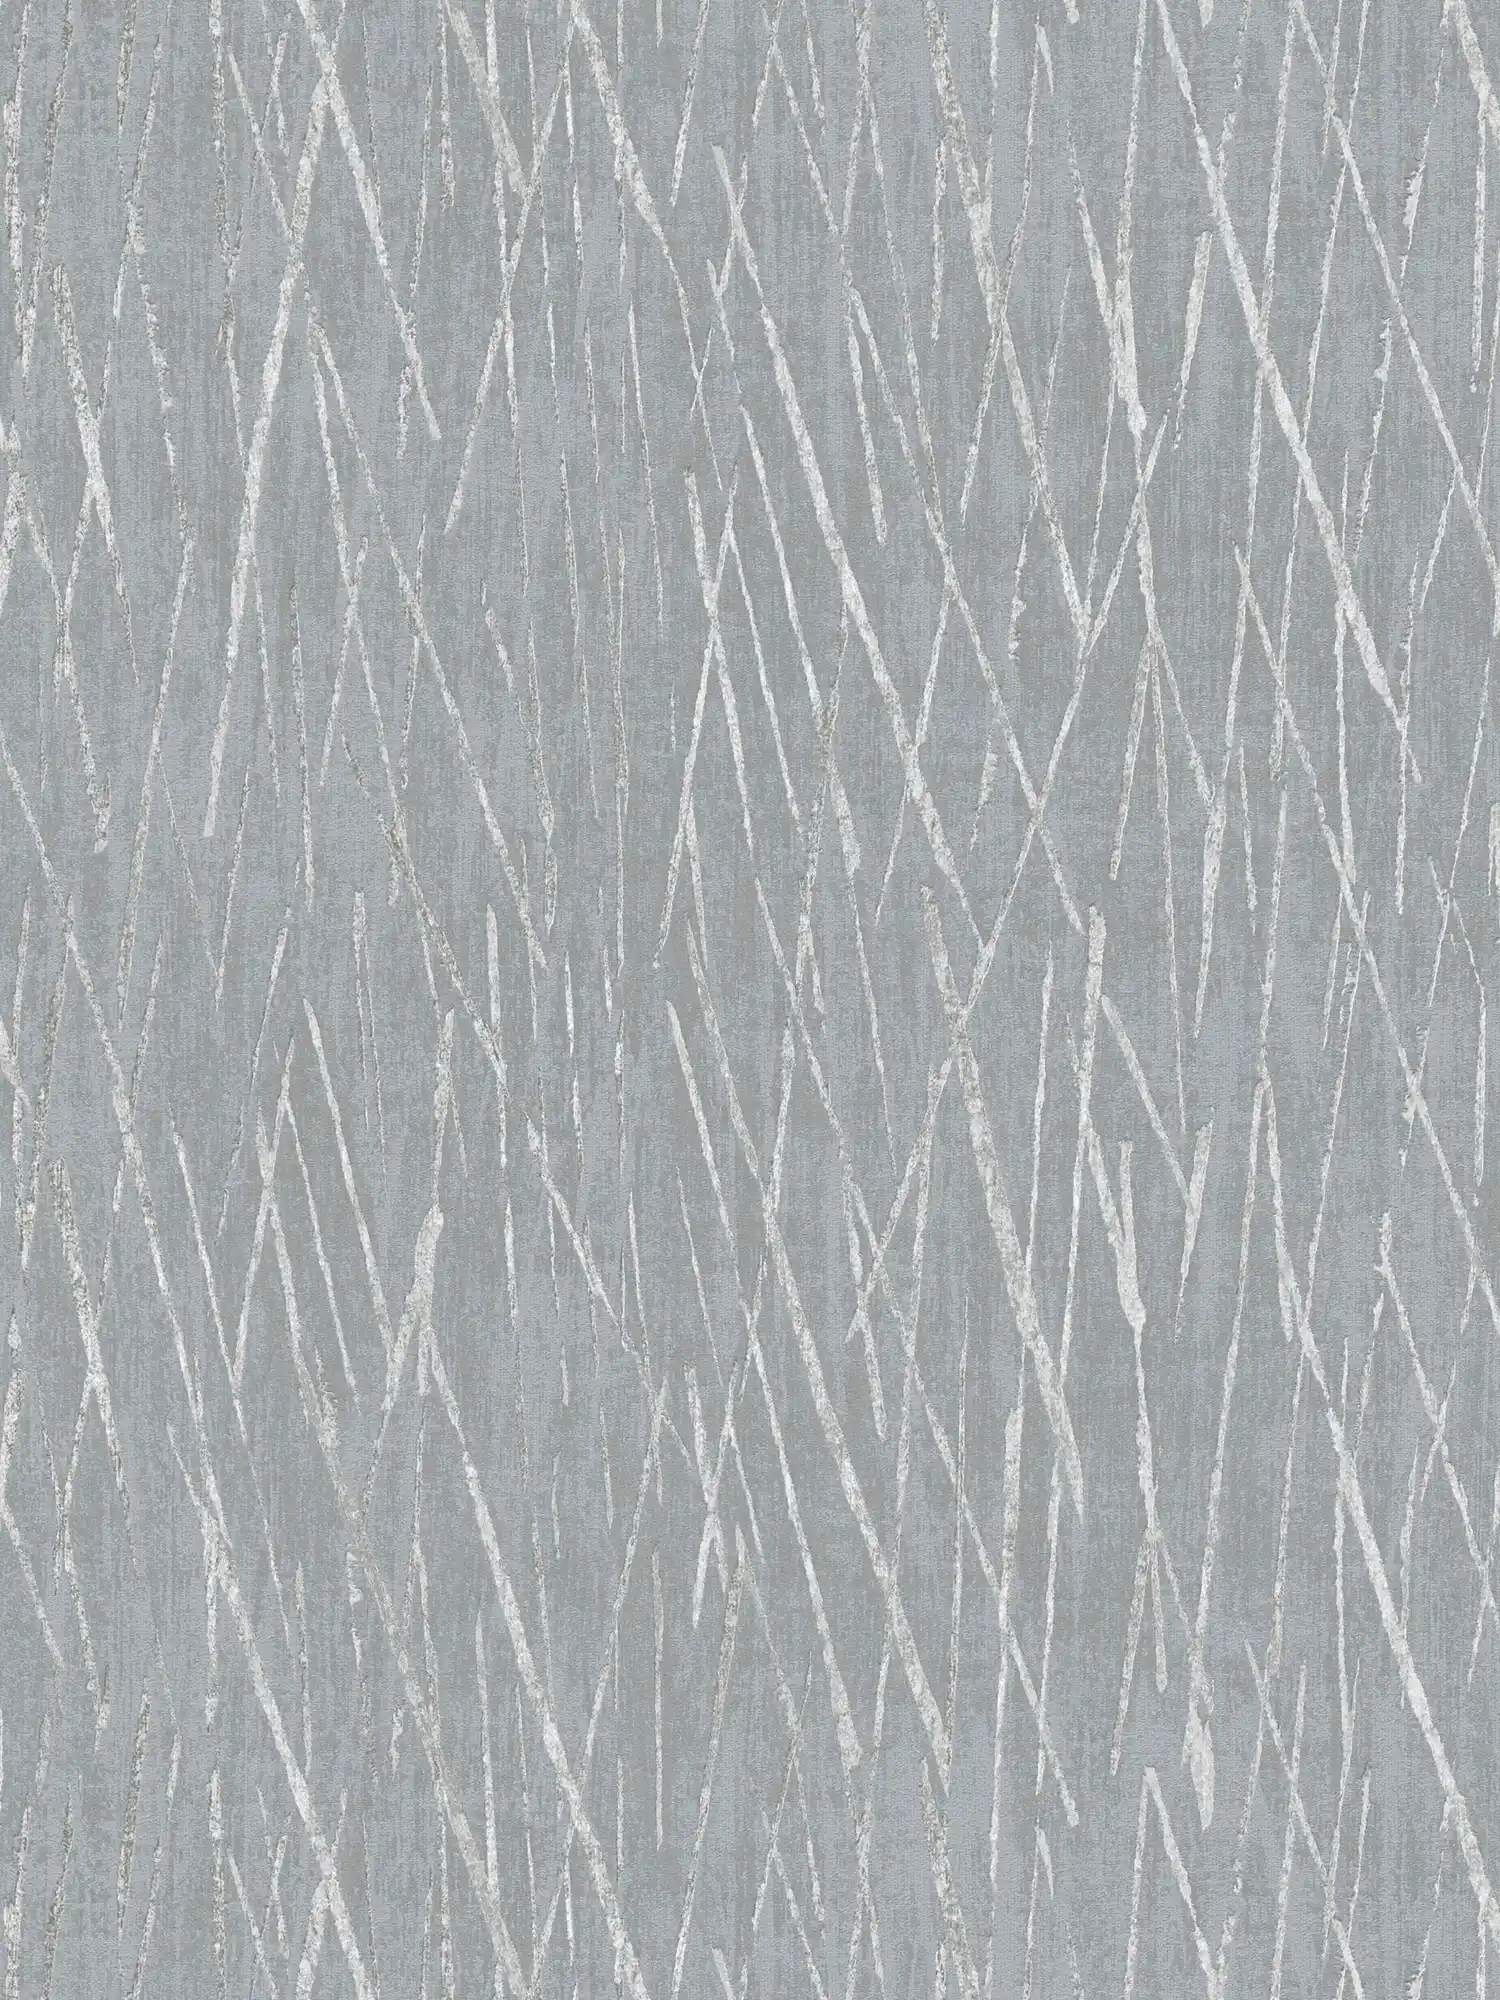 Non-woven wallpaper with nature design and metallic effect - grey, metallic
